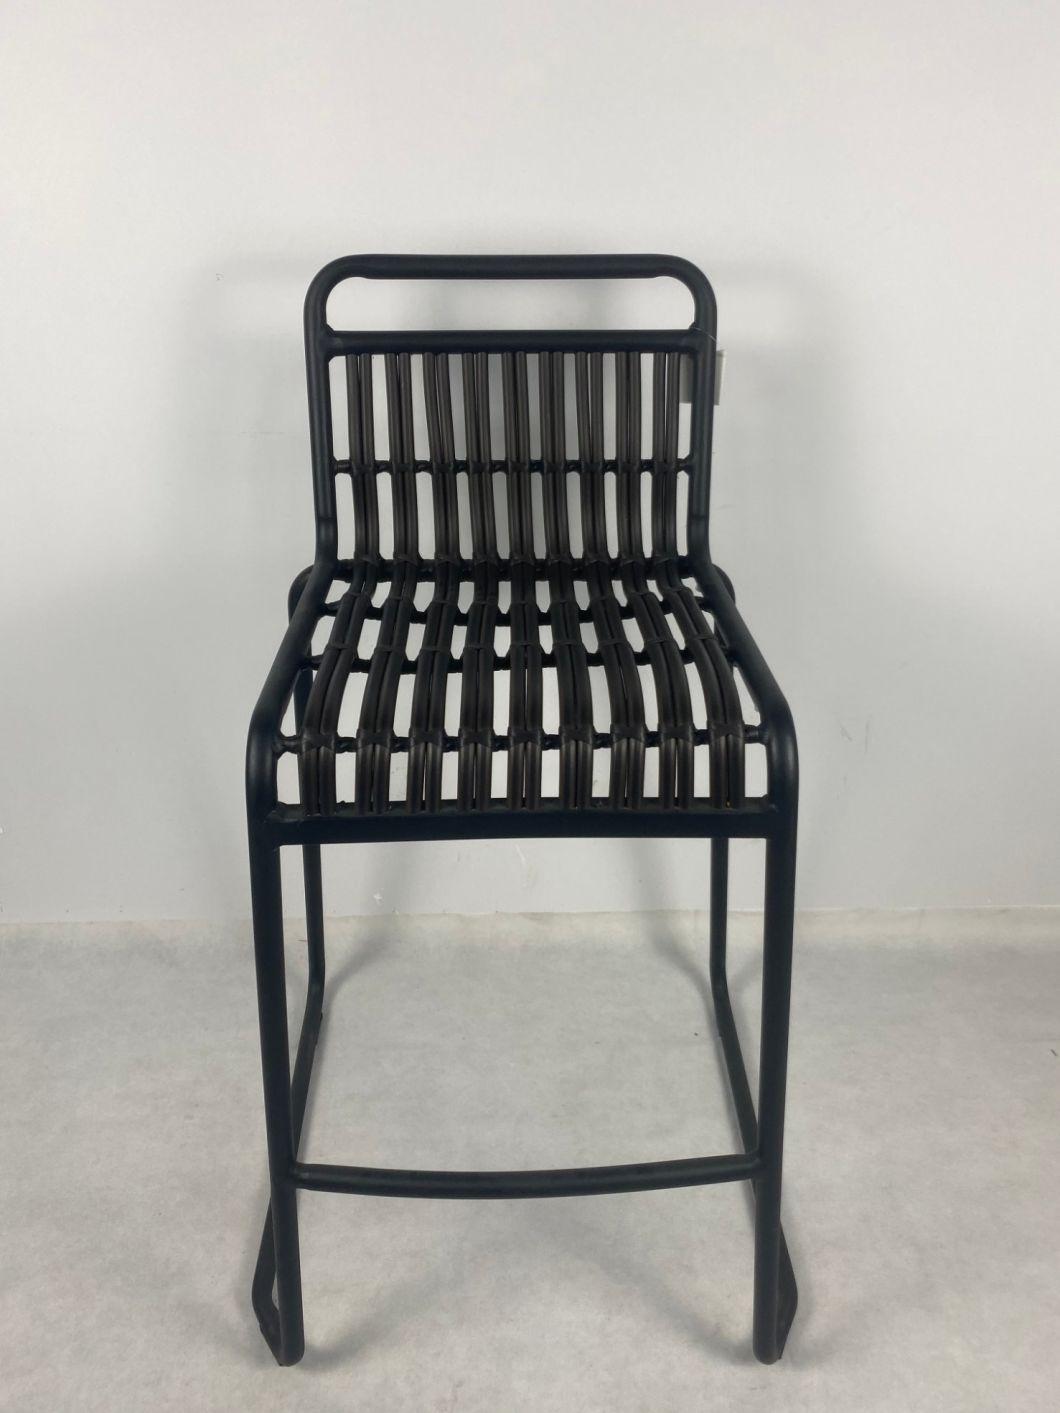 Simplish Look Aluminum Wicker Weaving Bistro Chair Furniture